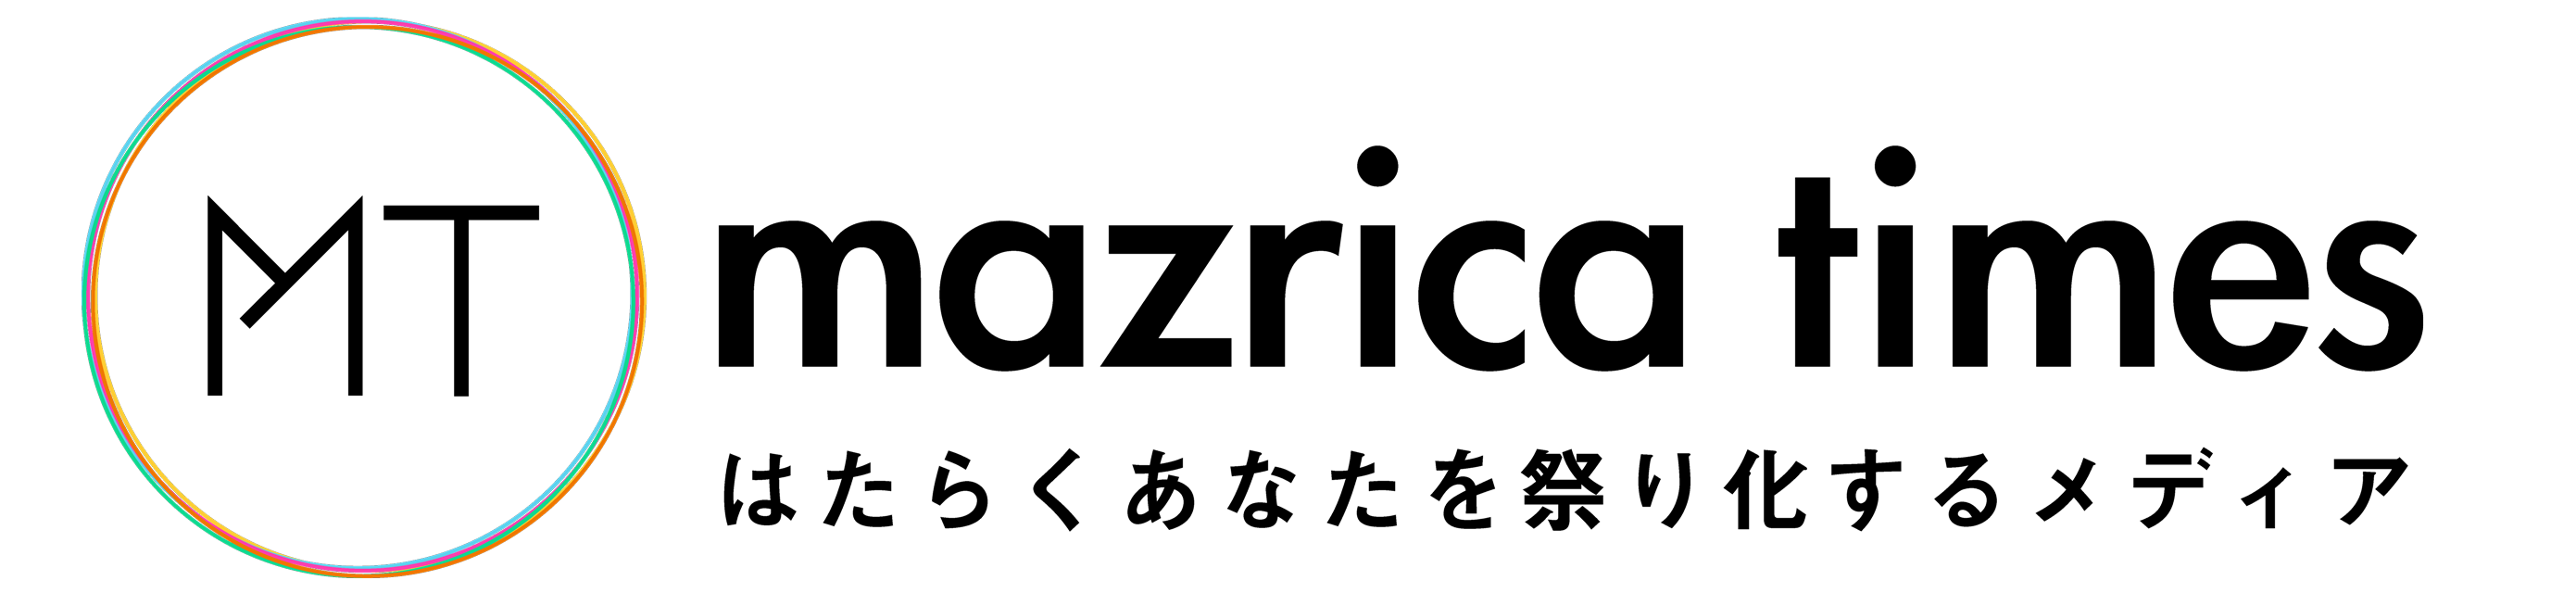 mazrica times logo